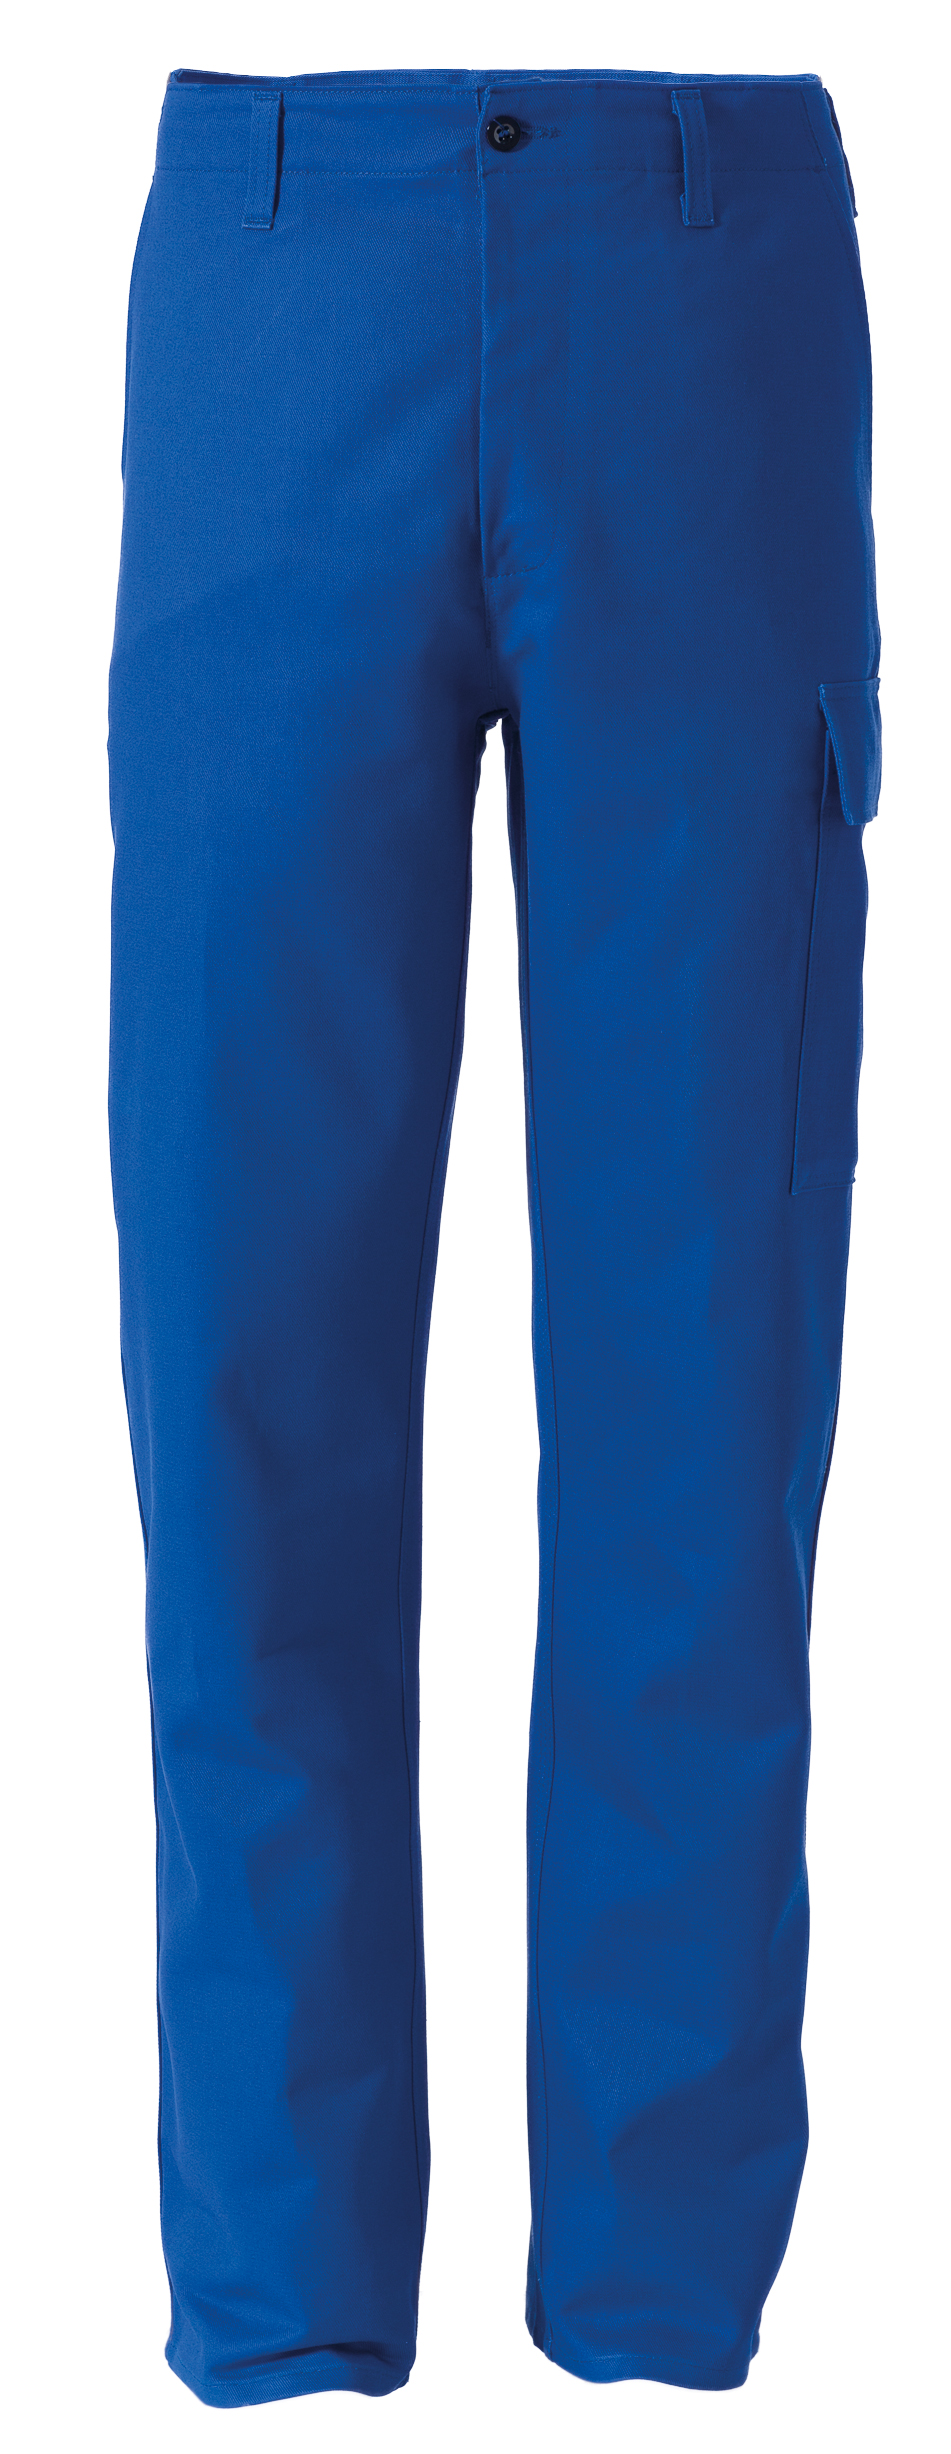 ROFA Bundhose Arbeitshose Berufshose Workerhose Arbeitskleidung Berufskleidung kornblau ca 330 g